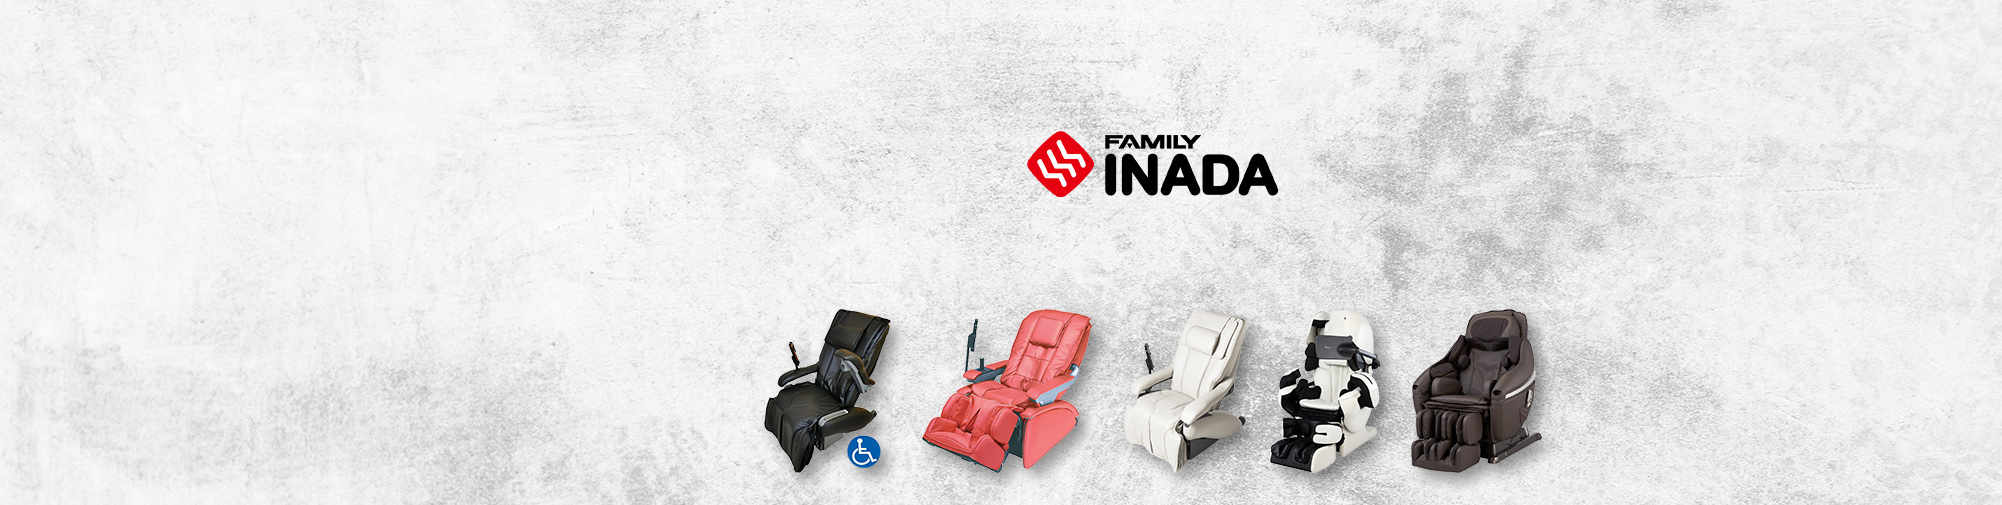 Familia Inada - empresa tradicional japonesa | Massage Chair World